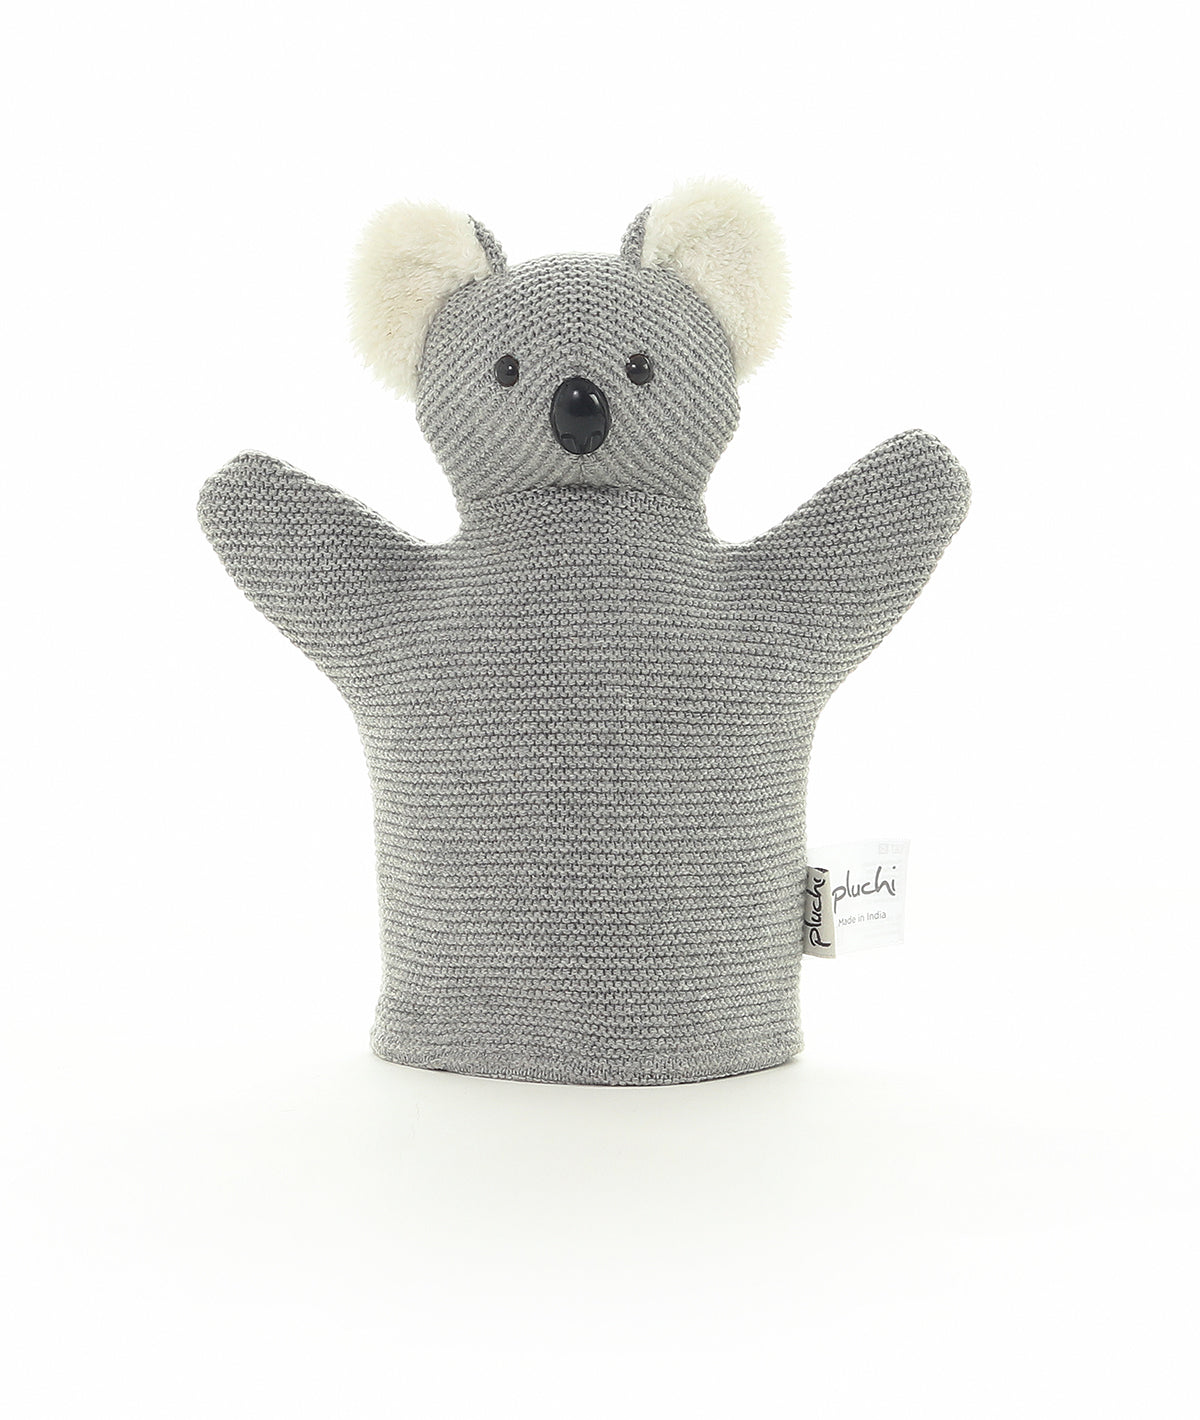 Hand Puppet Cotton Knitted Stuffed Soft Toy (Light Grey Melange)